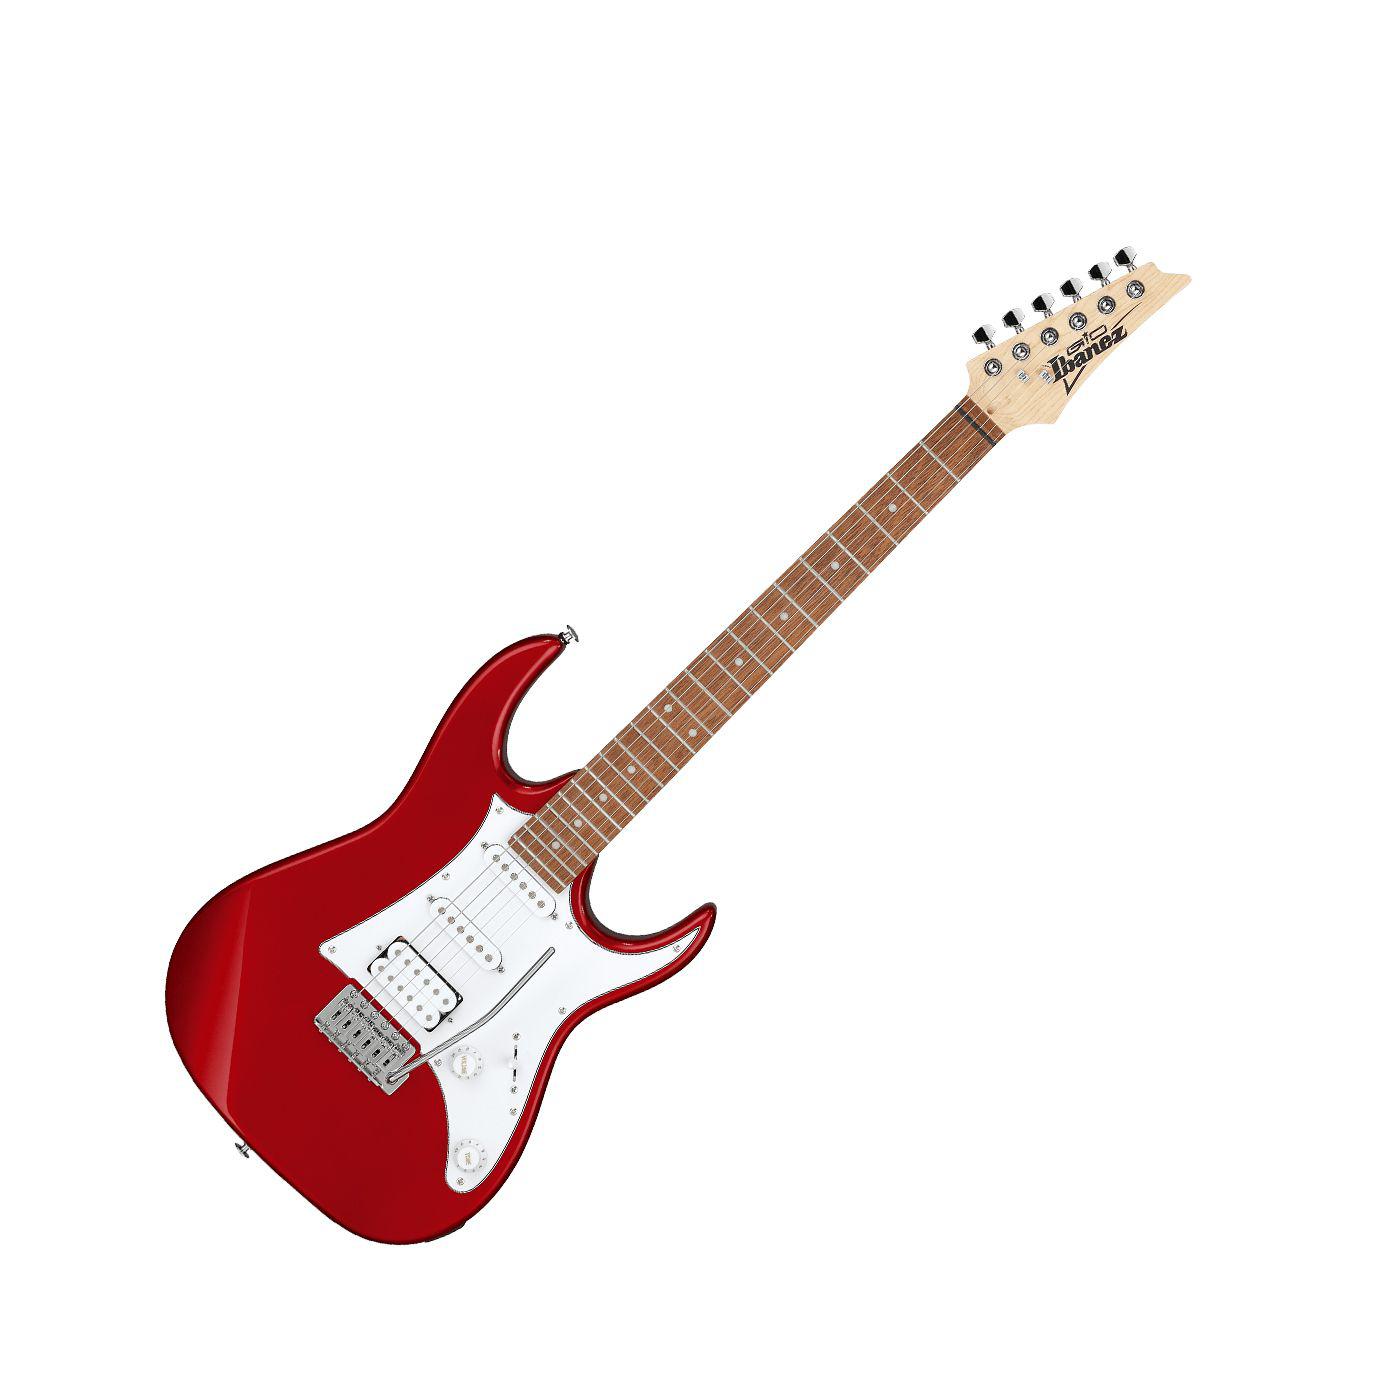 Ibañez - Guitarra Eléctrica "Gio Rg" Roja Mod.GRX40-CA_4